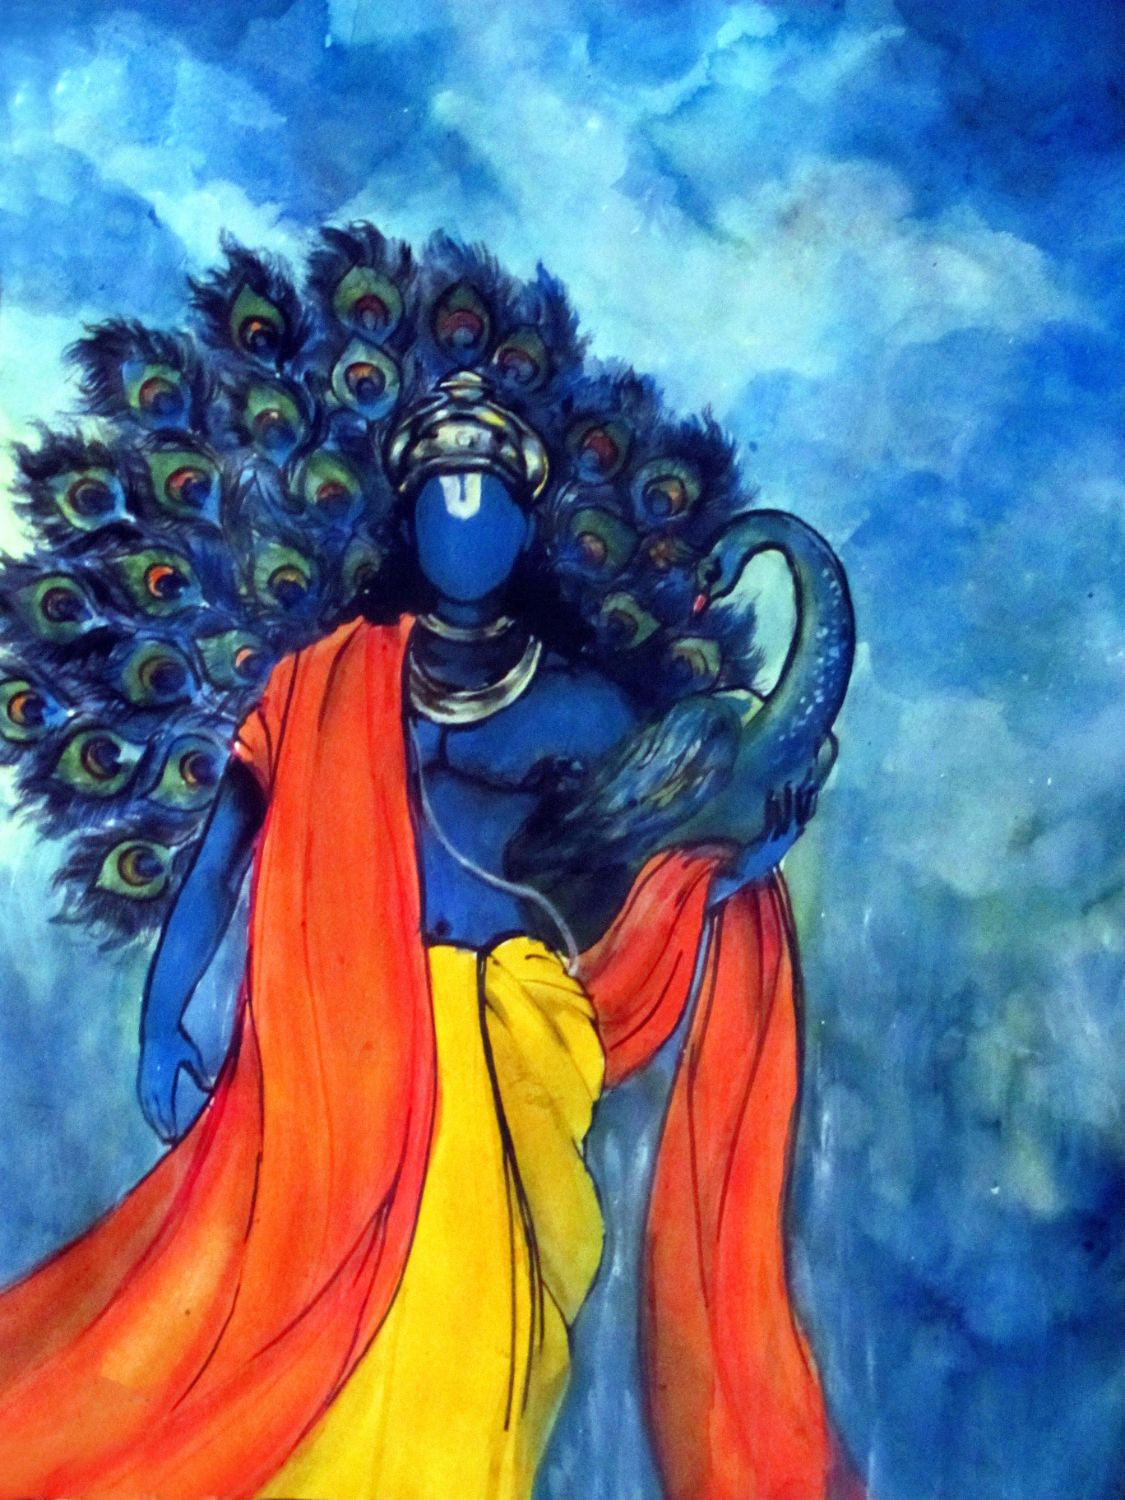 Indian Art Acrylic Painting Krishna With Peacock 3ad9450f f6d3 4e25 bb49 b866ea72ccbe